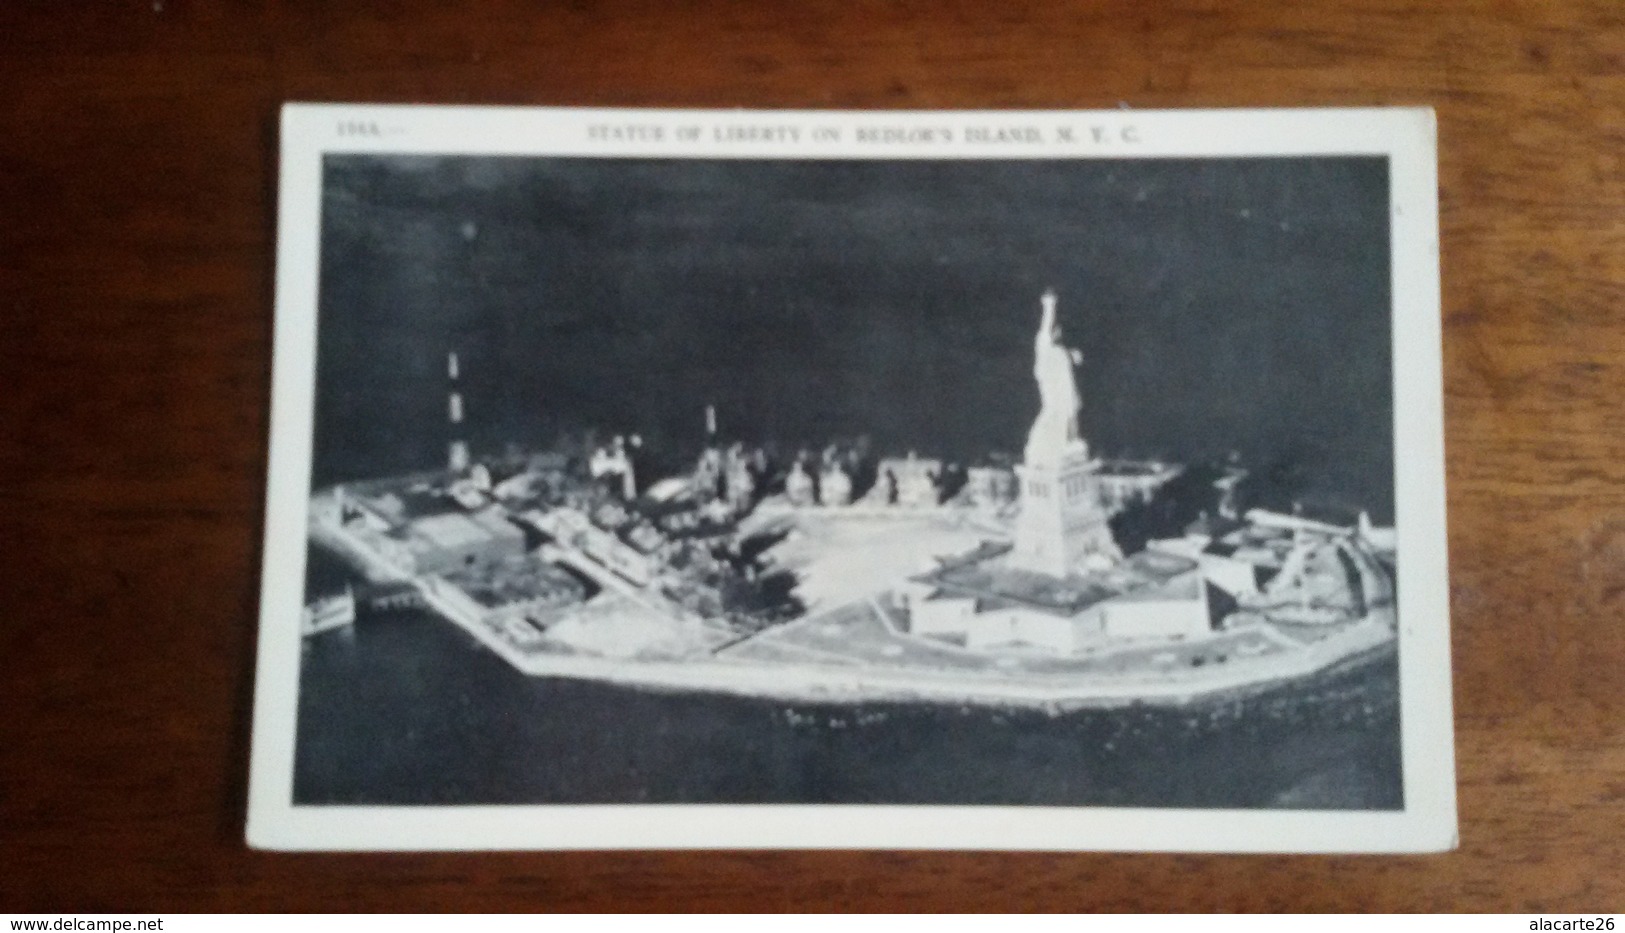 CPA USA - NEW YORK - STATUE OF LIBERTY ON BEDLOE'S ISLAND - Statue Of Liberty